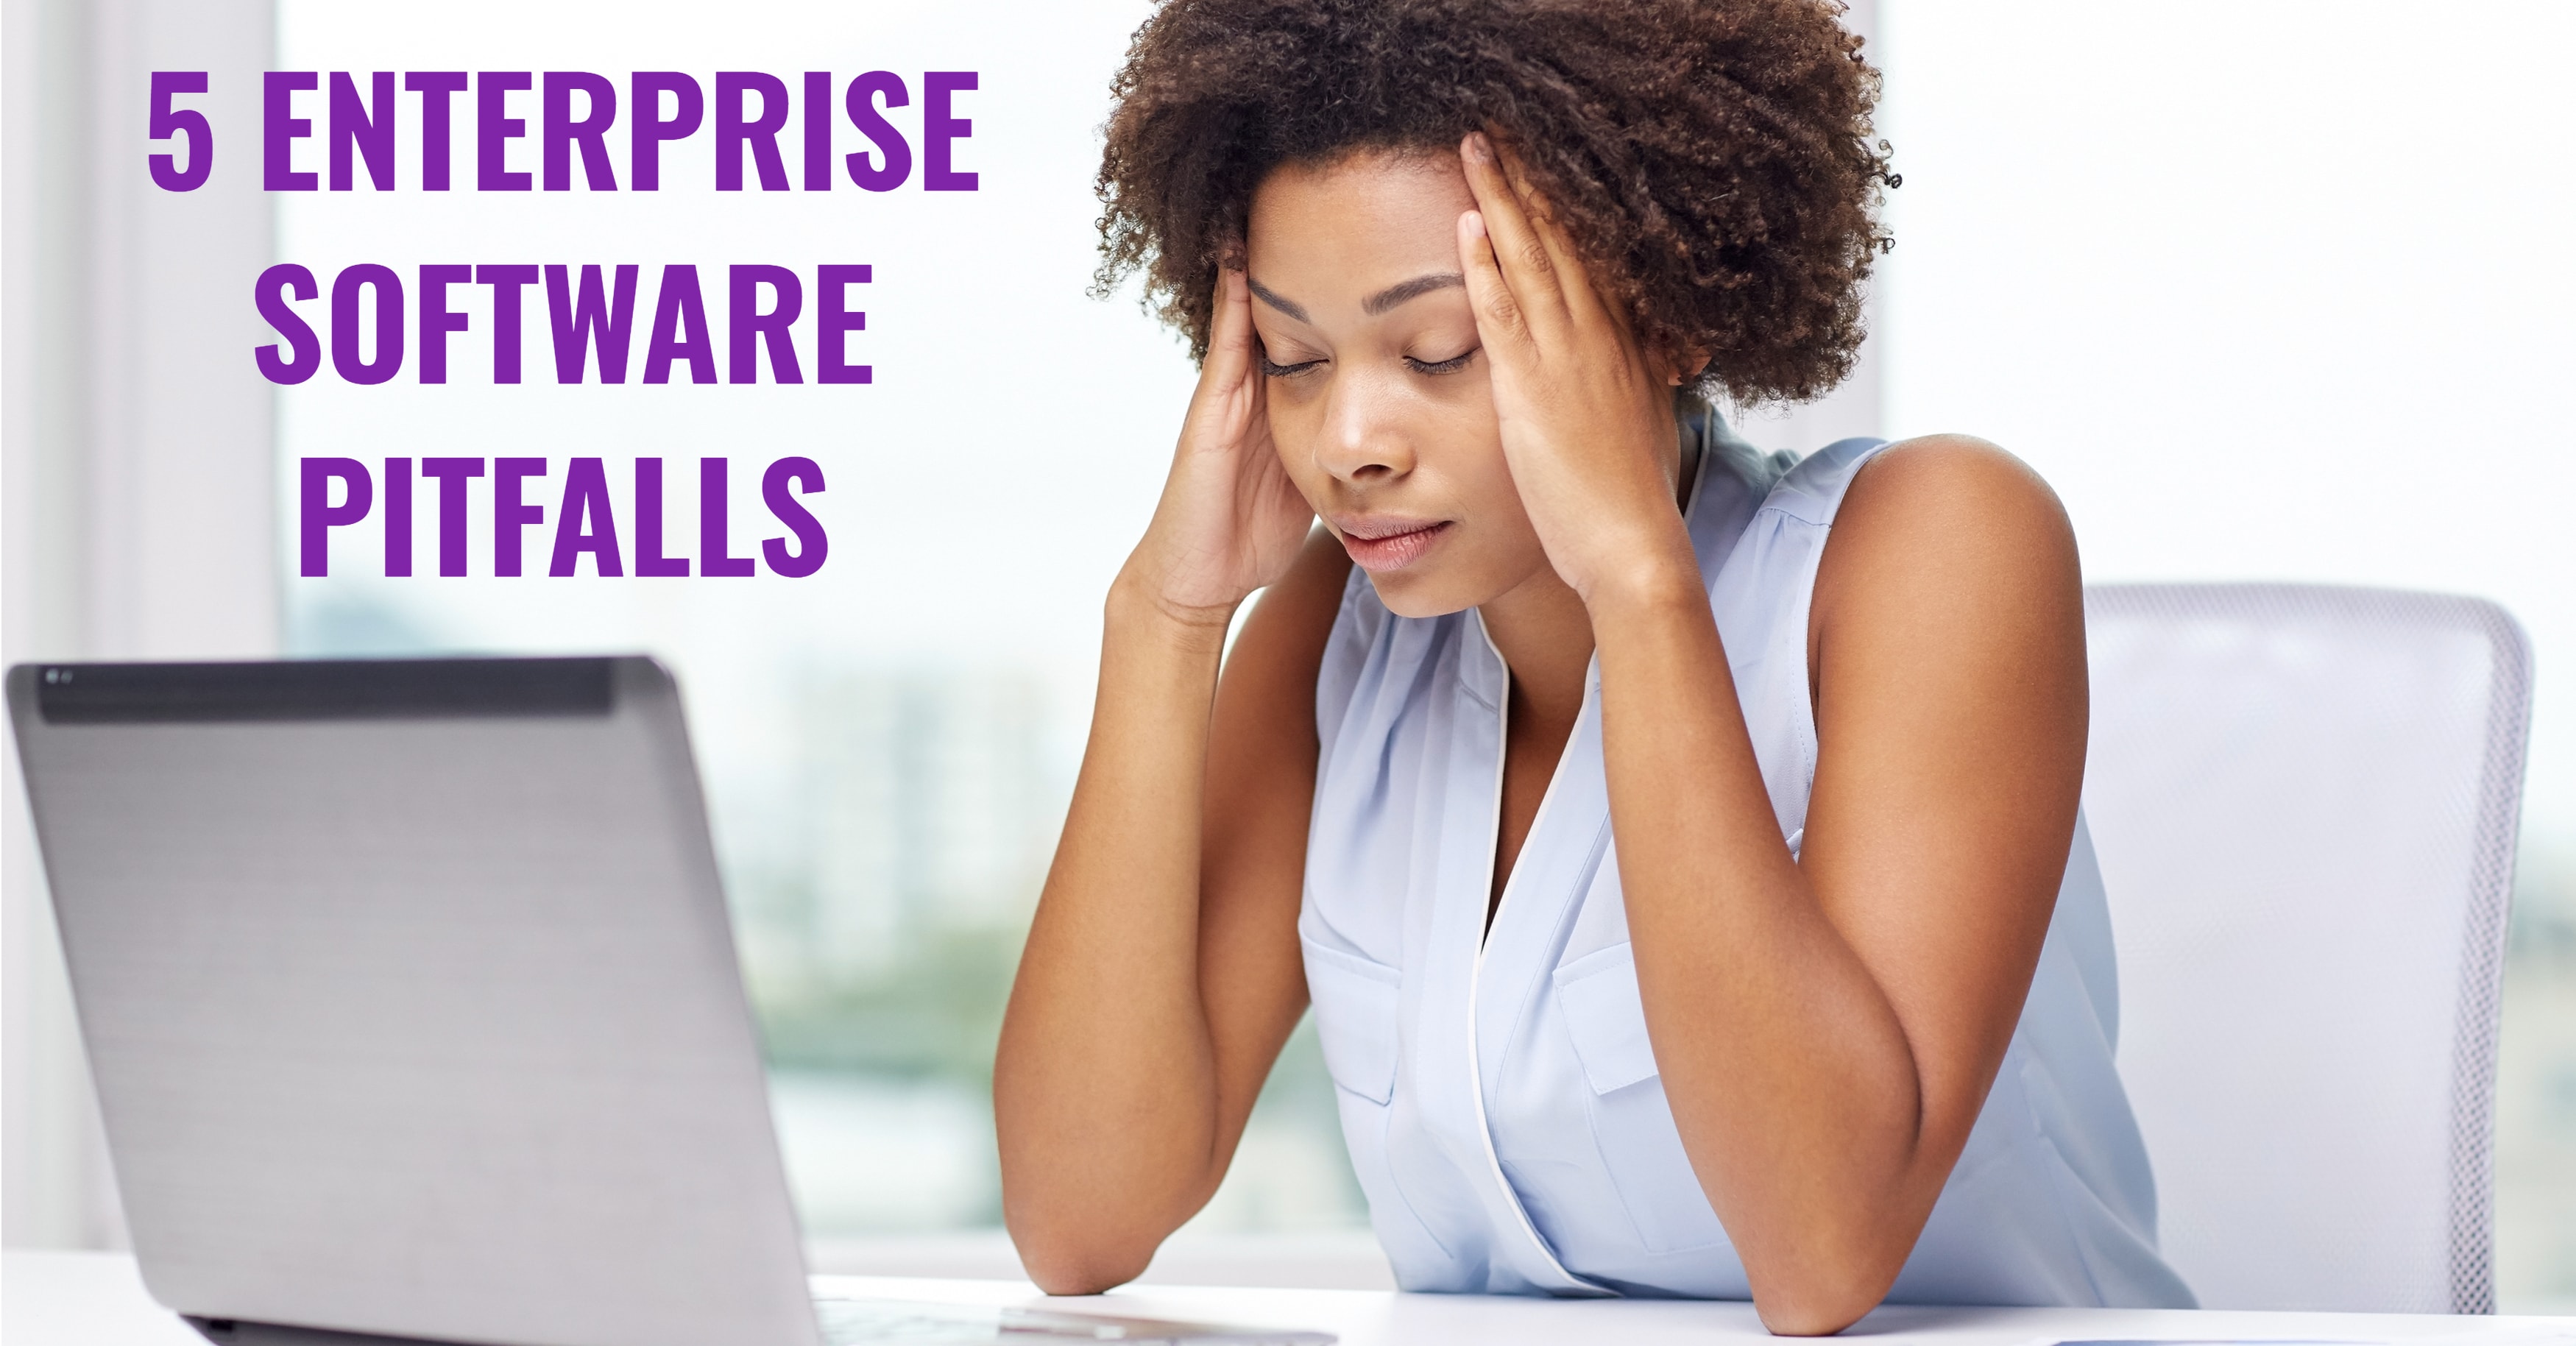 Enterprise Software Pitfalls